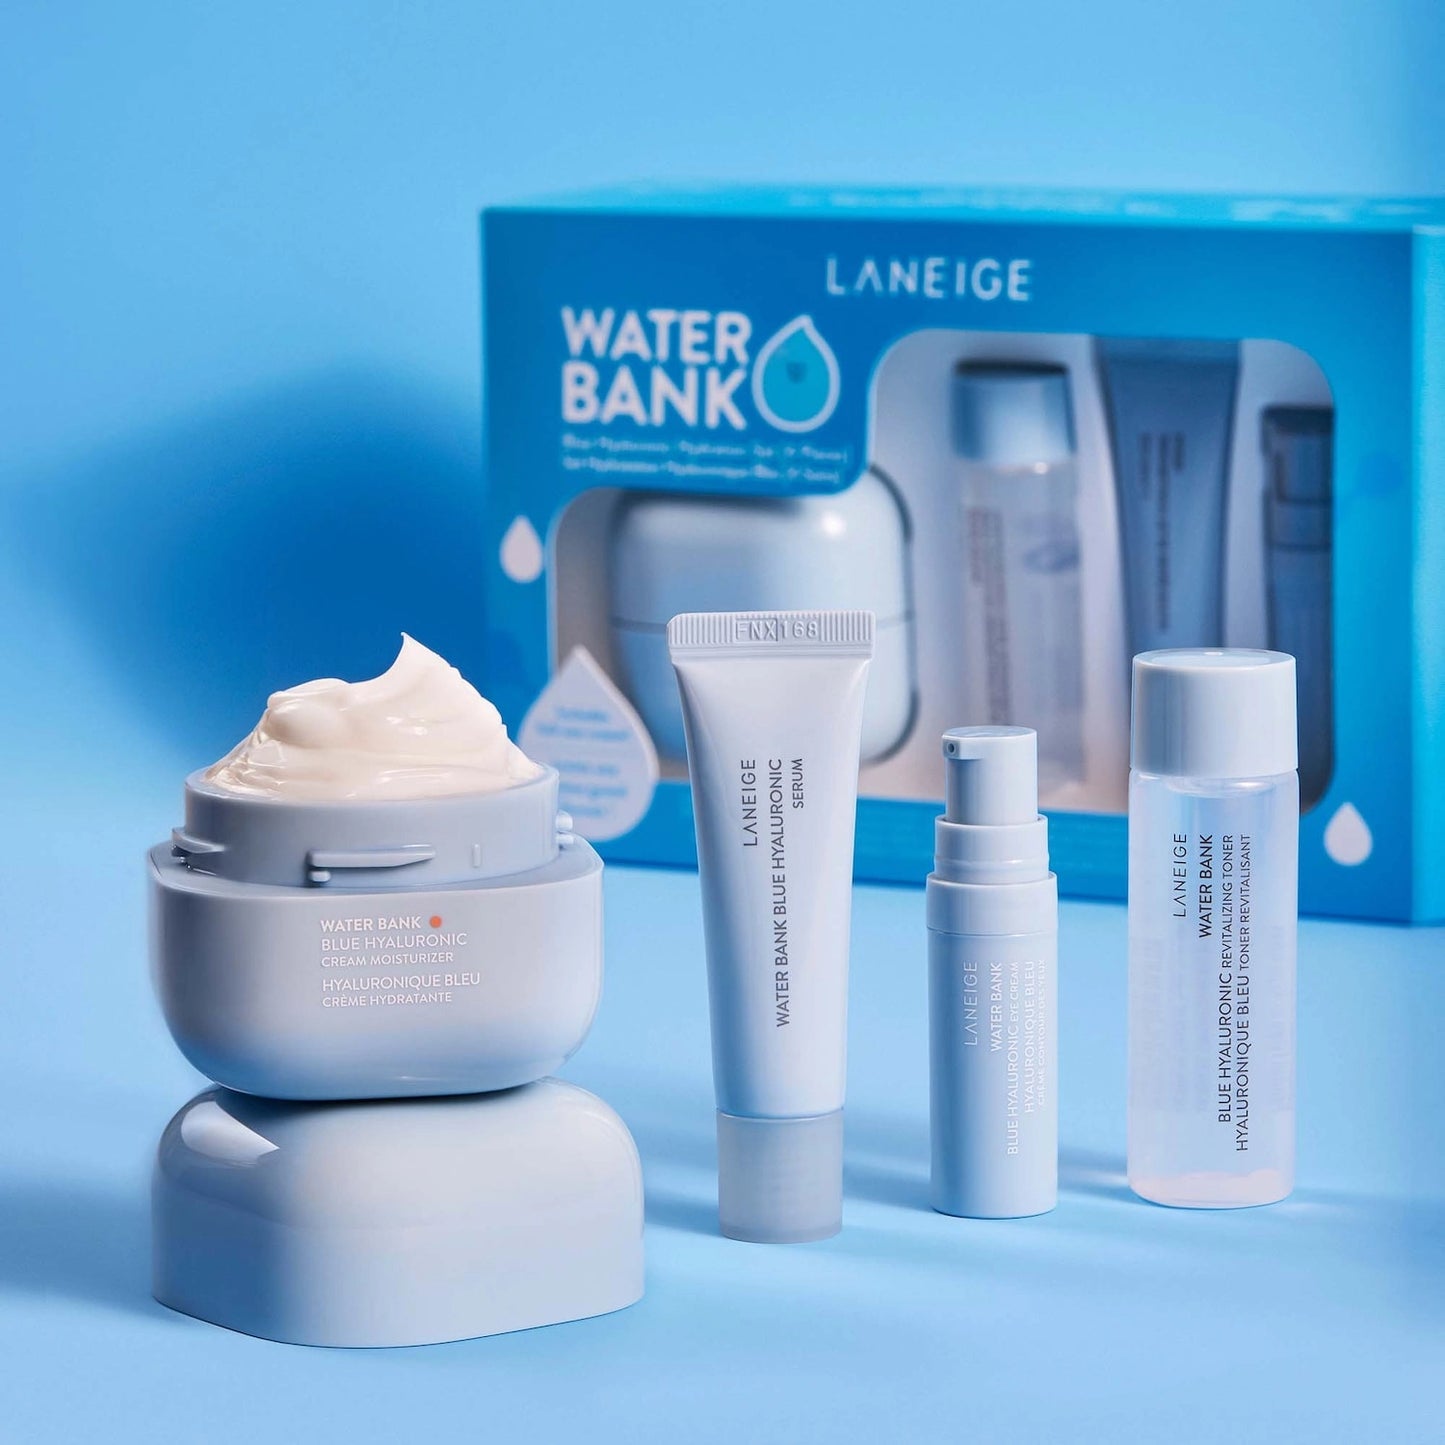 Laneige Water Bank Blue Hyaluronic Hydration Set